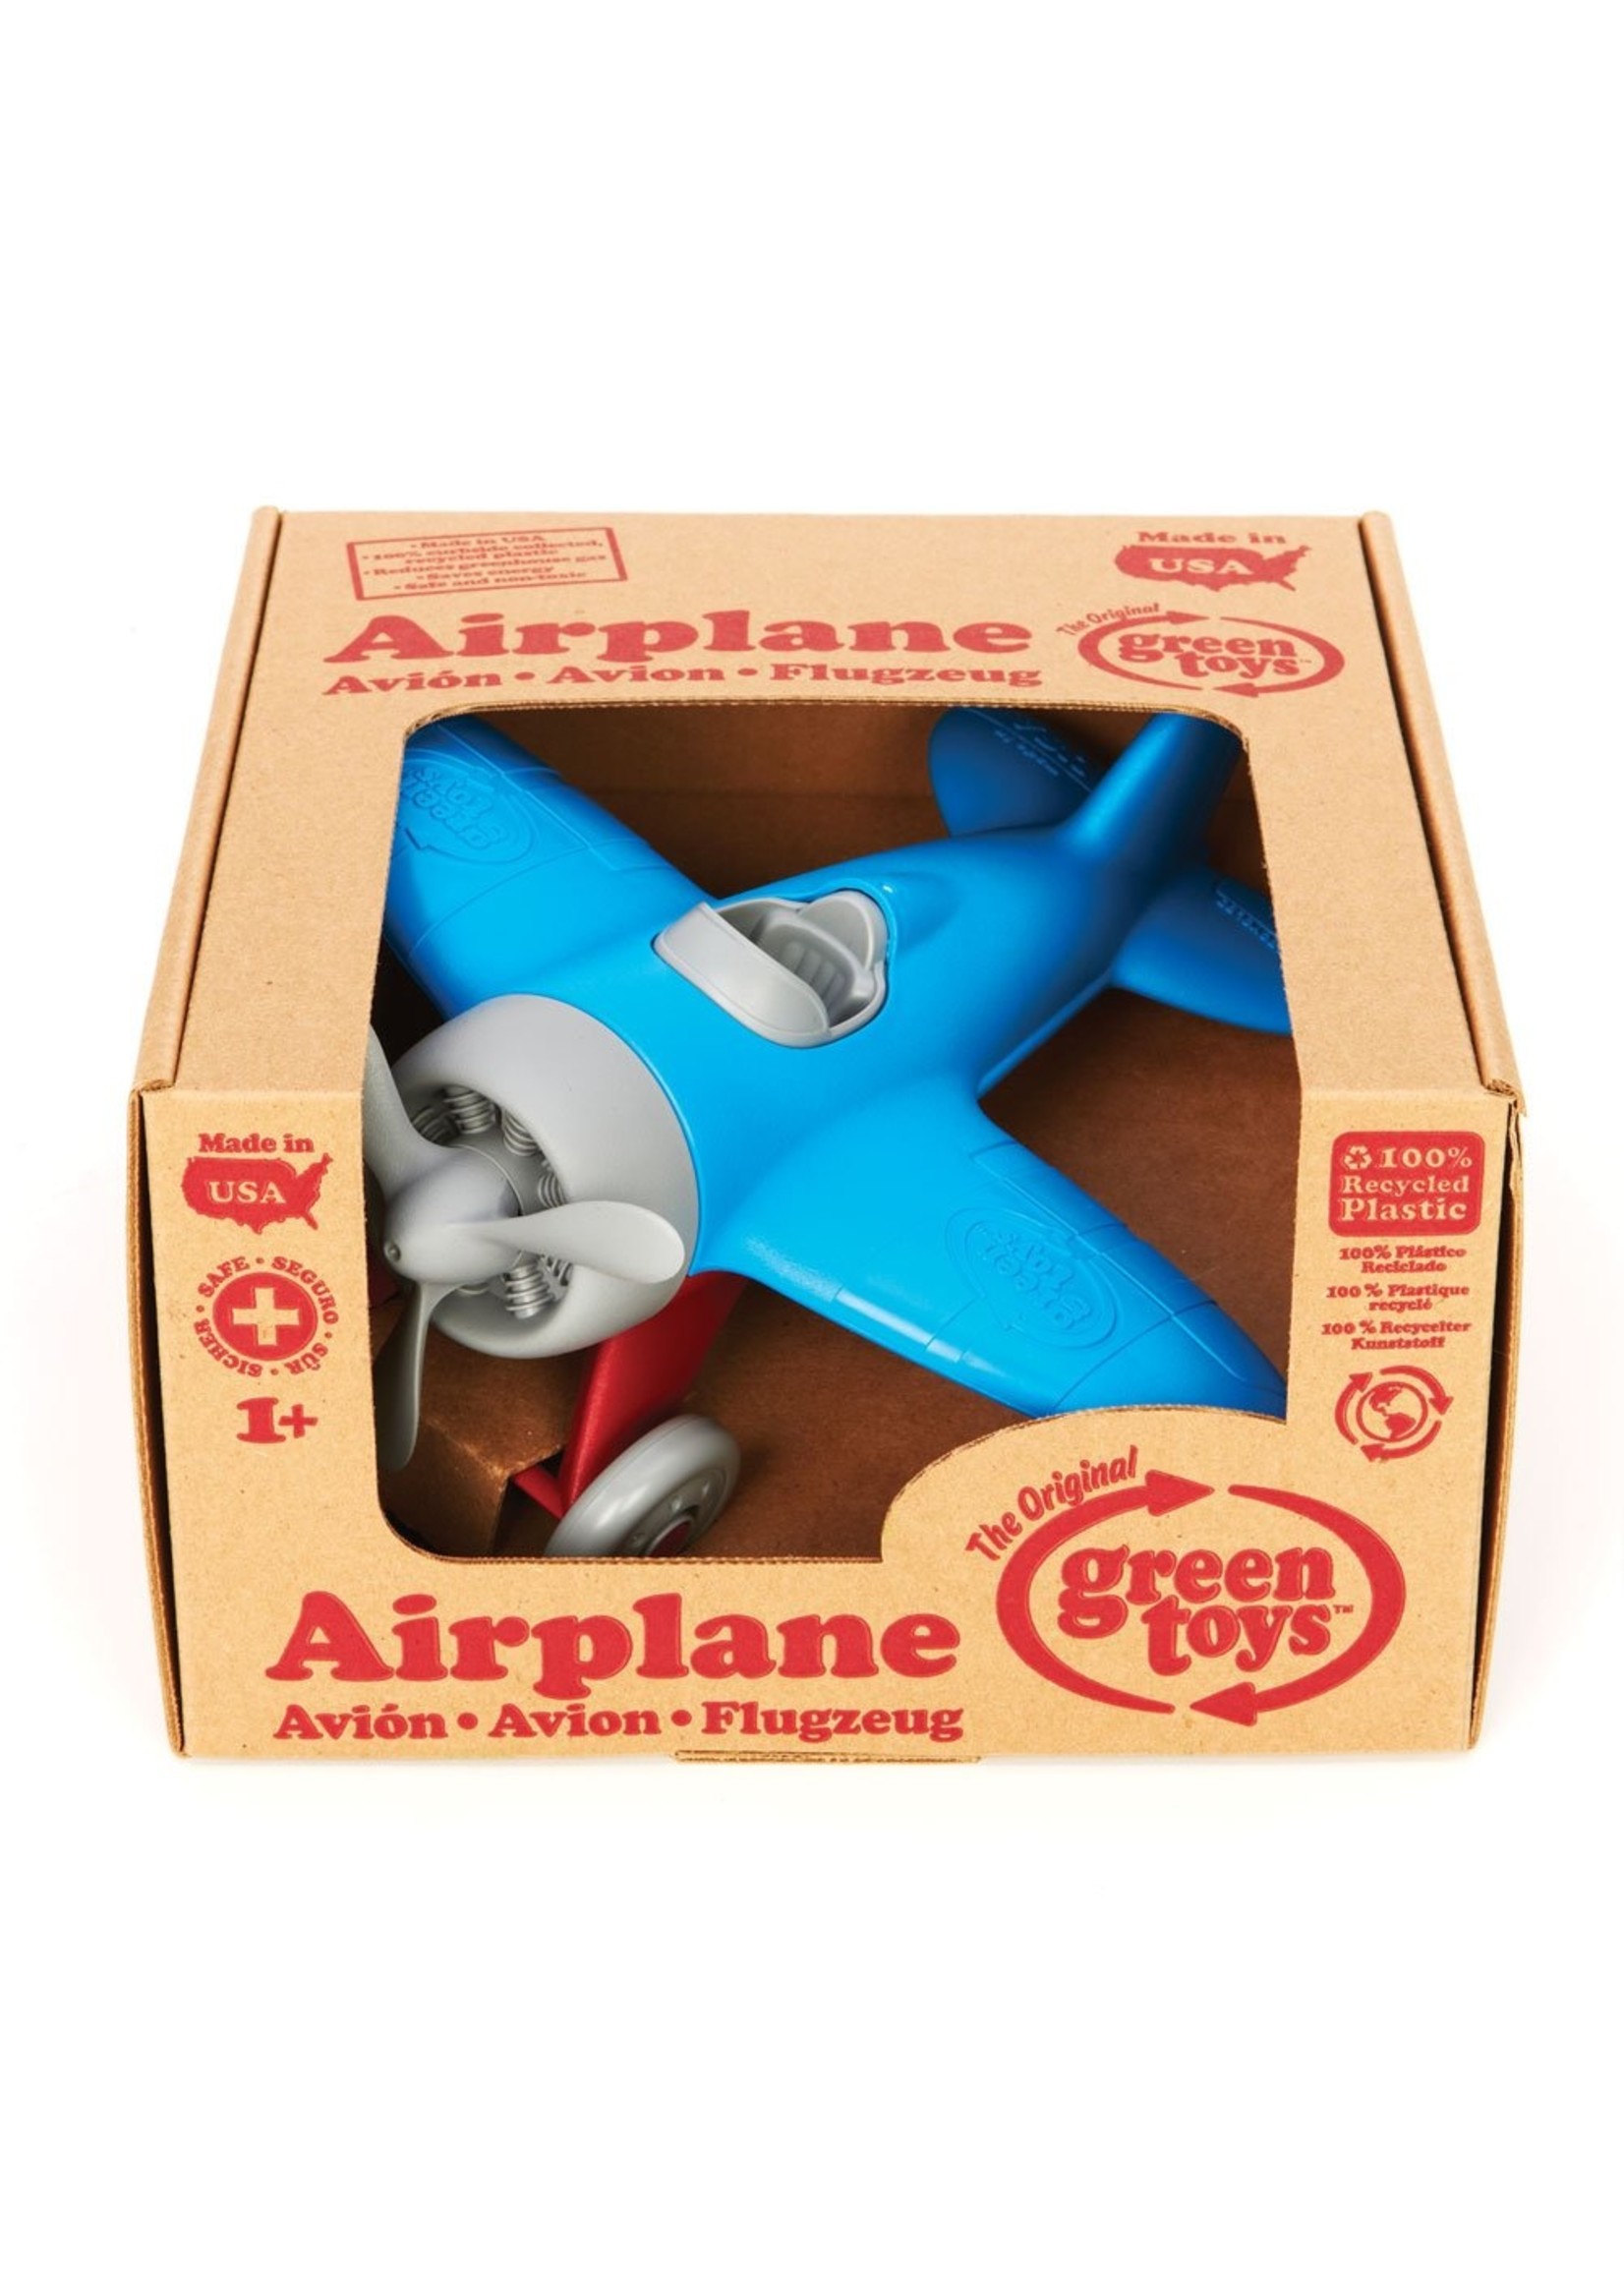 Green Toys Airplane - BPA Free, Phthalates Free Play Toy